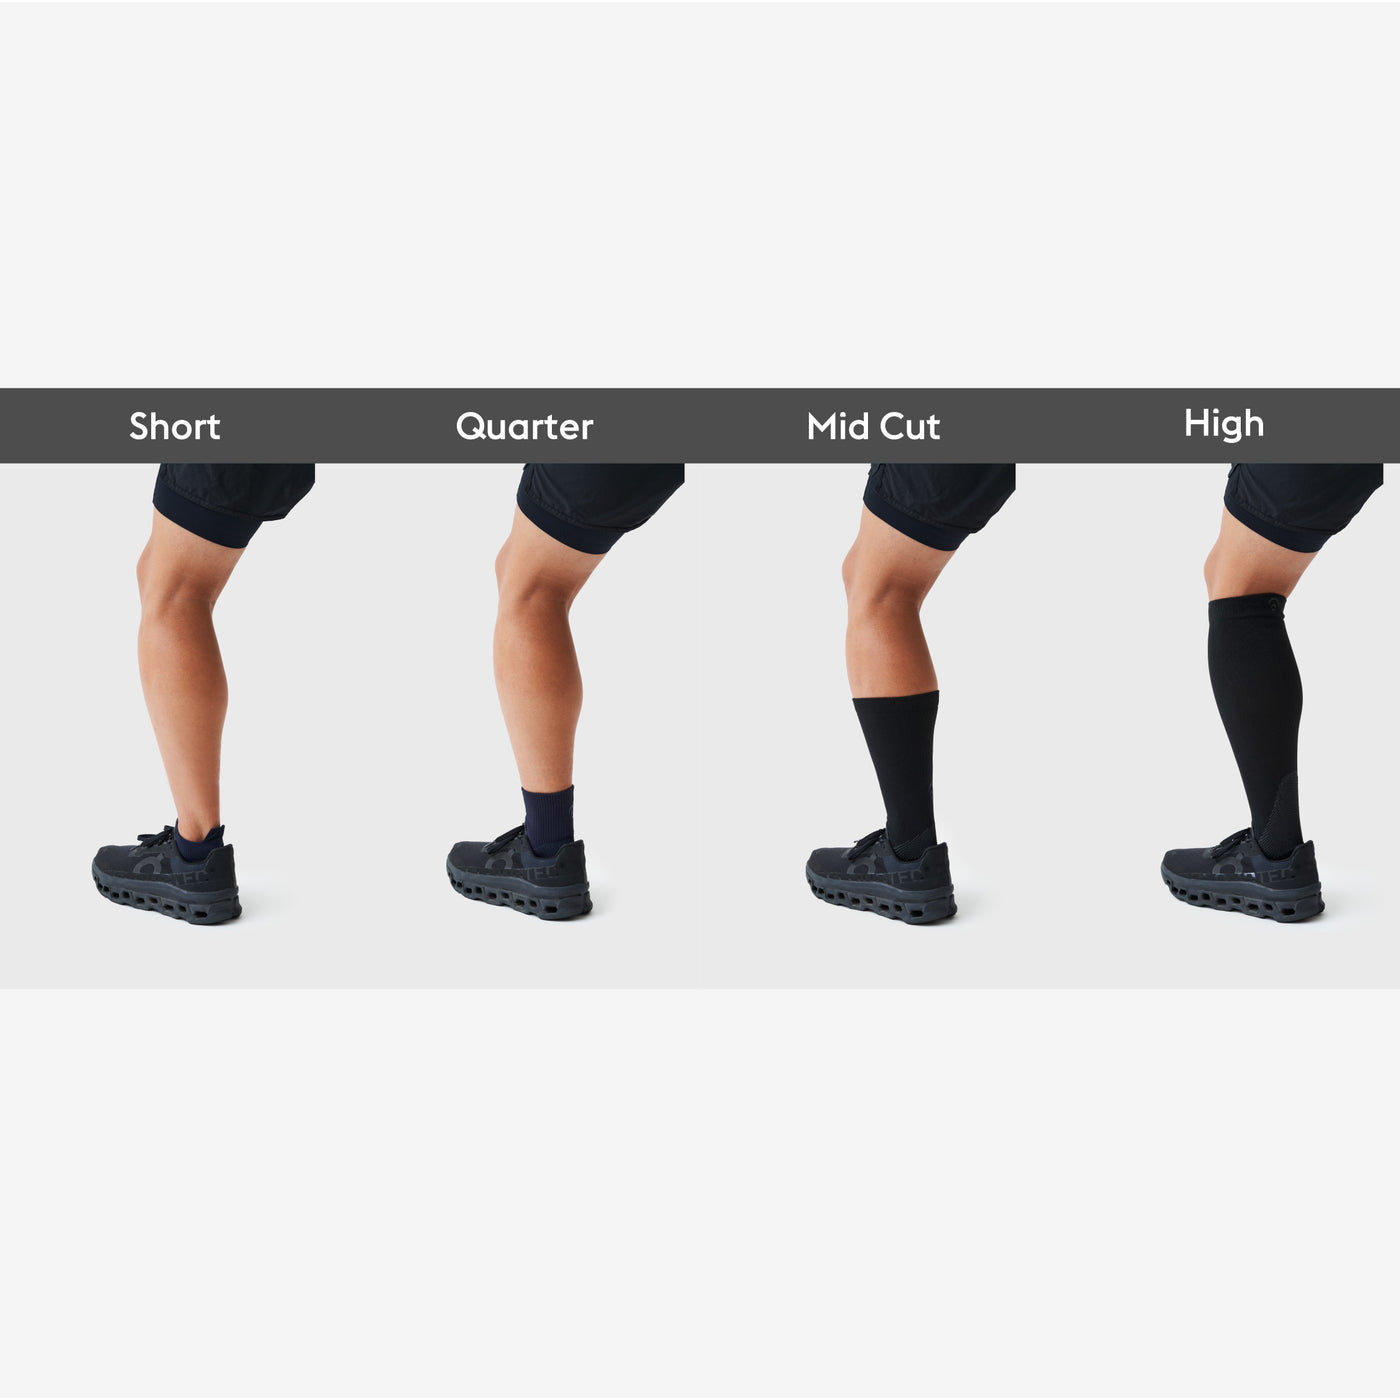 Paper Fiber C3fit Arch Support Ankle Socks